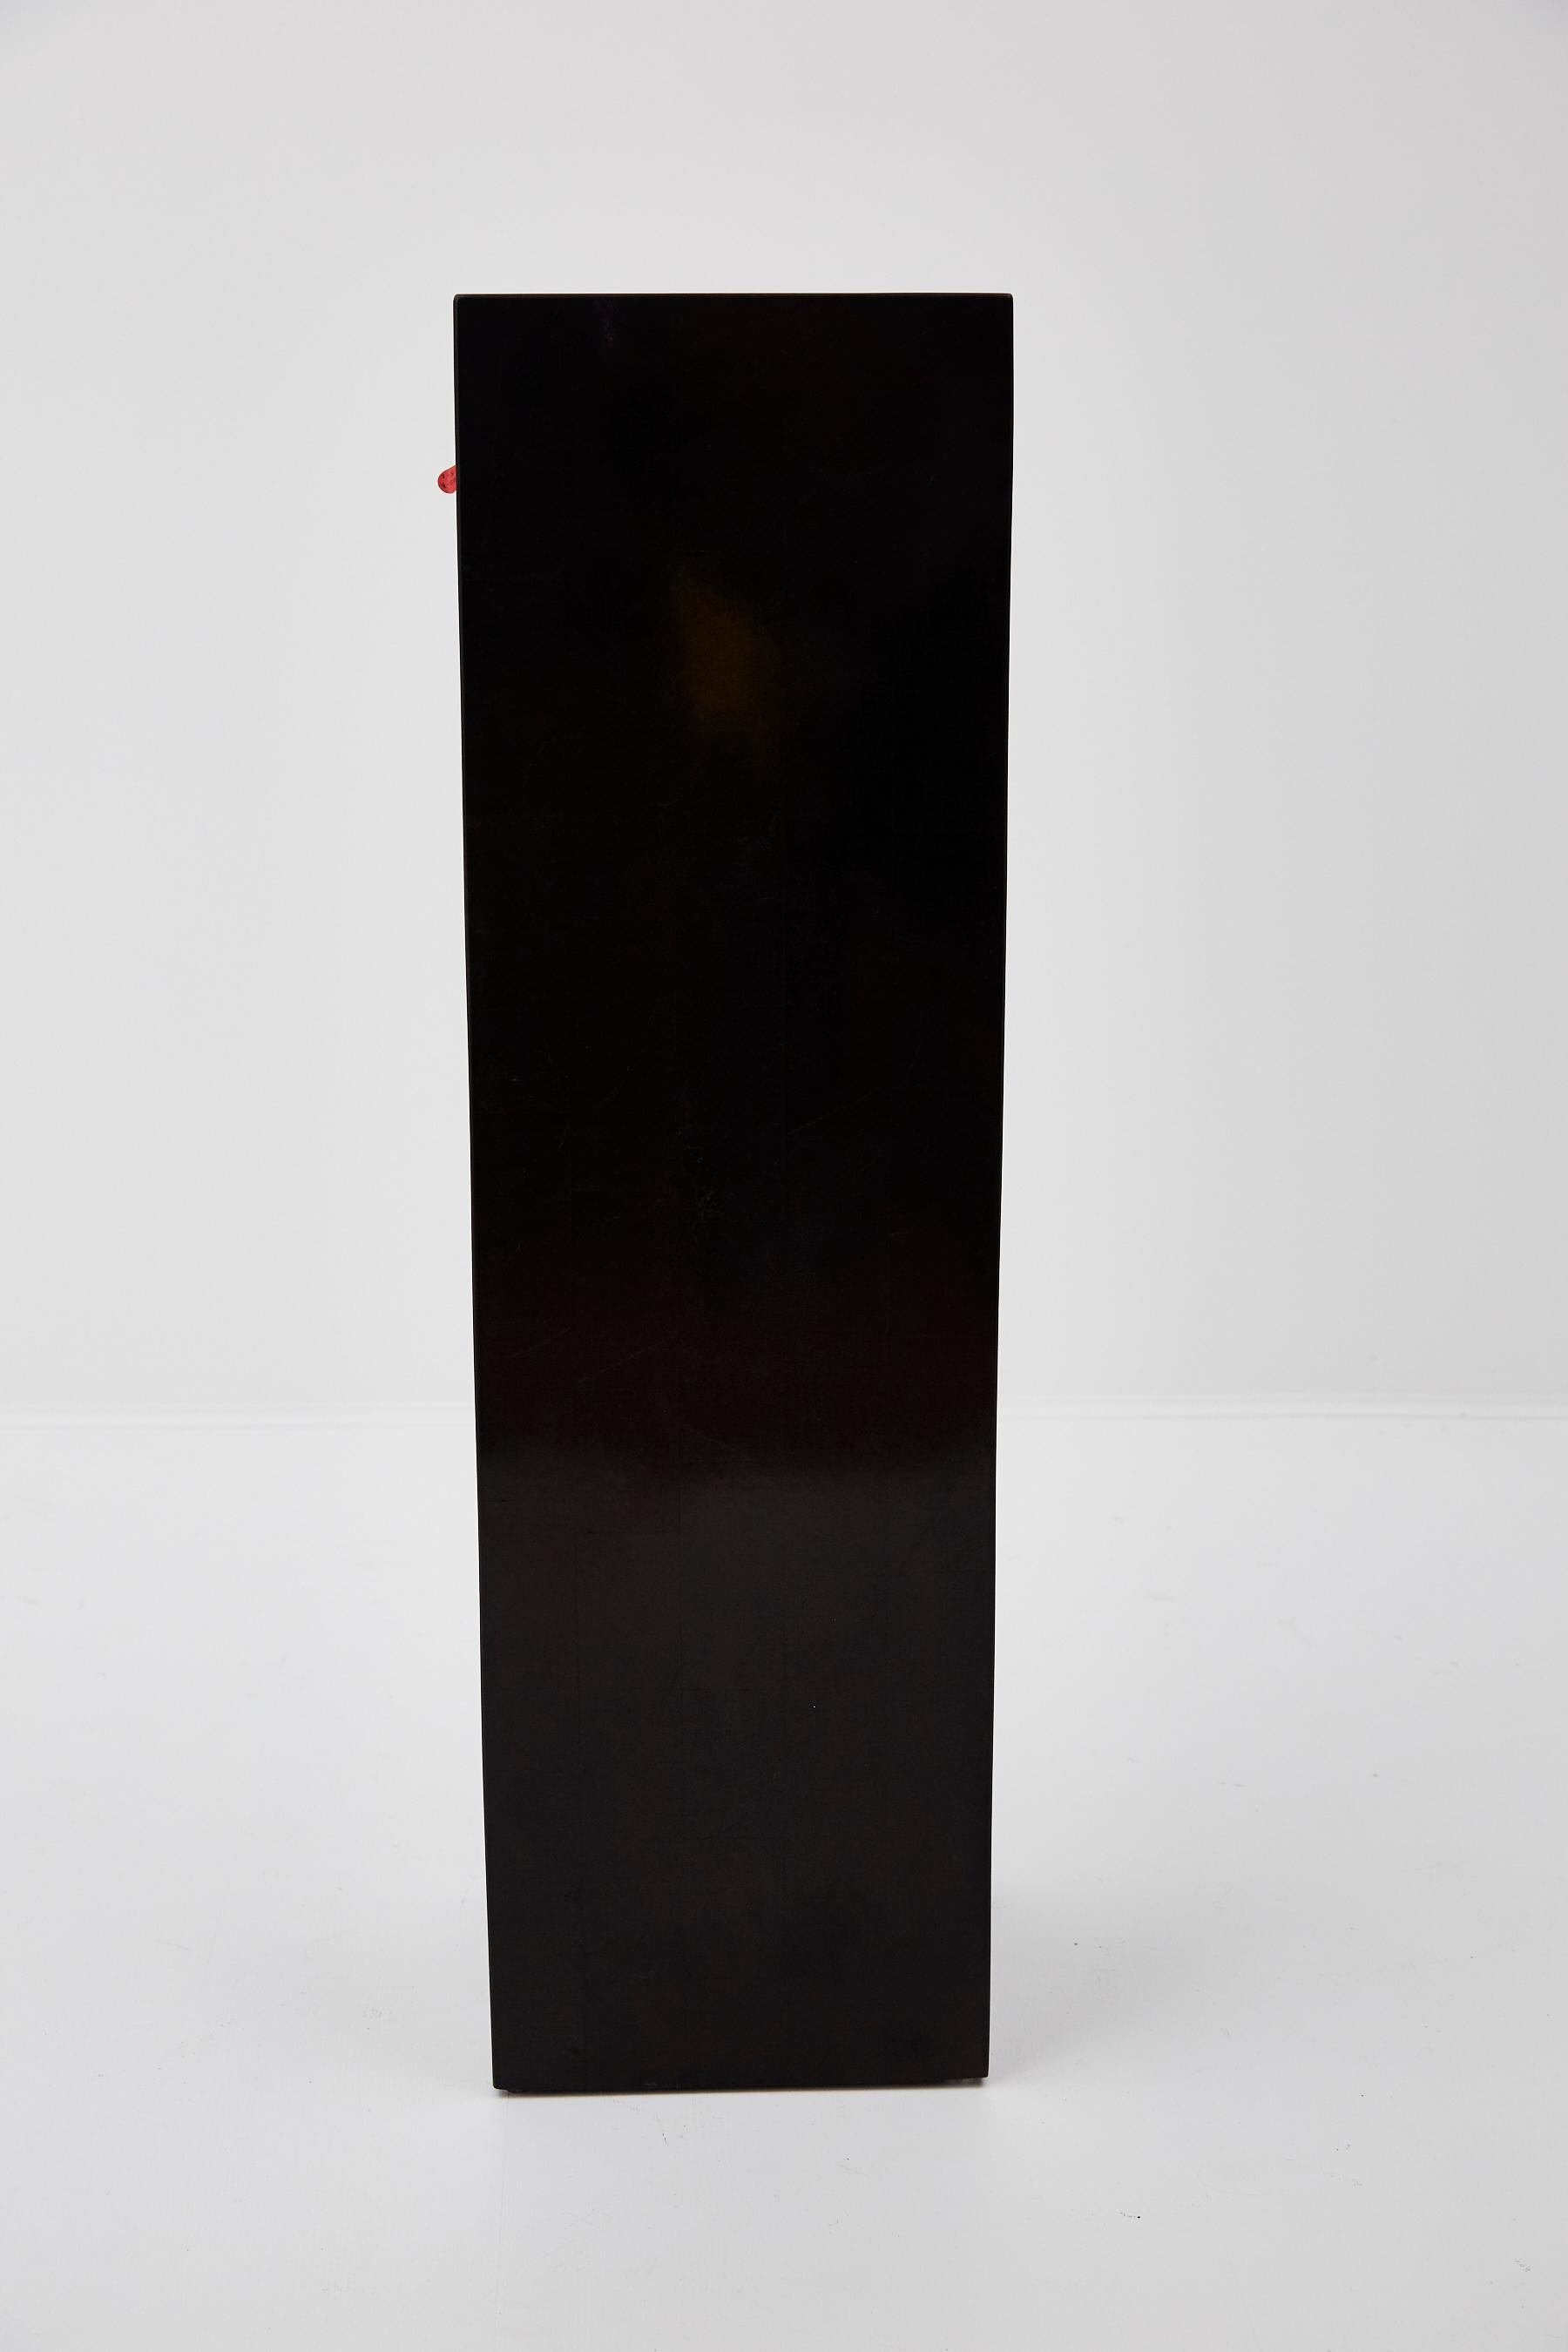 Minimalist Tessellated Black Stone Square Pedestal